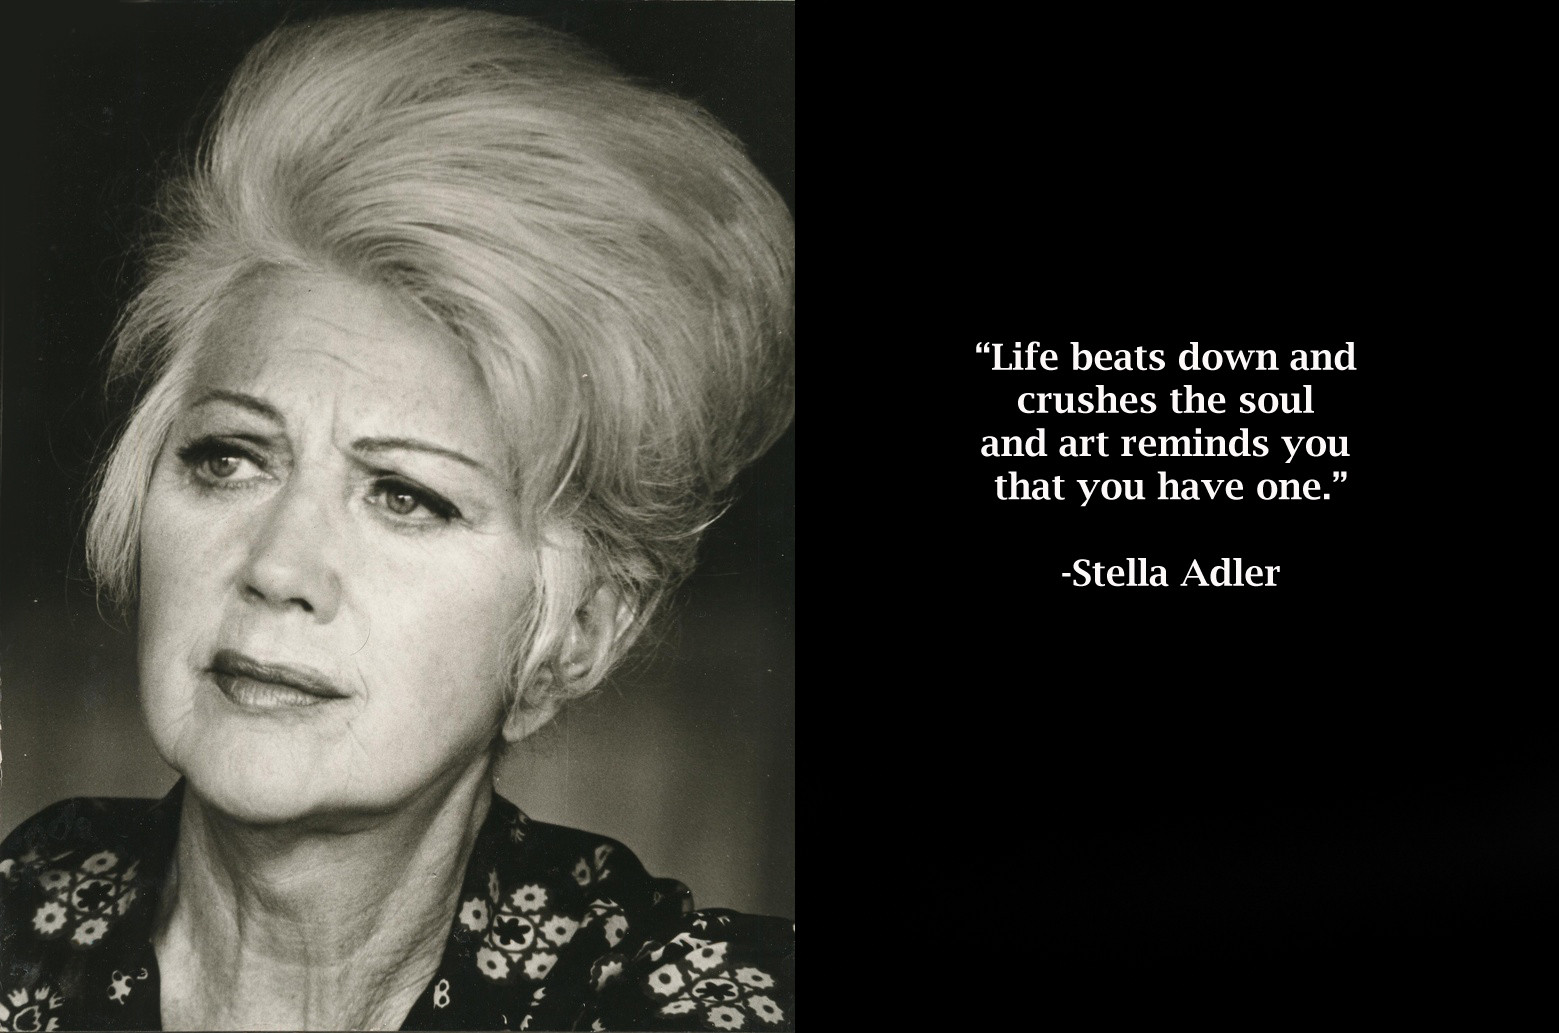 Stella Adler's quote